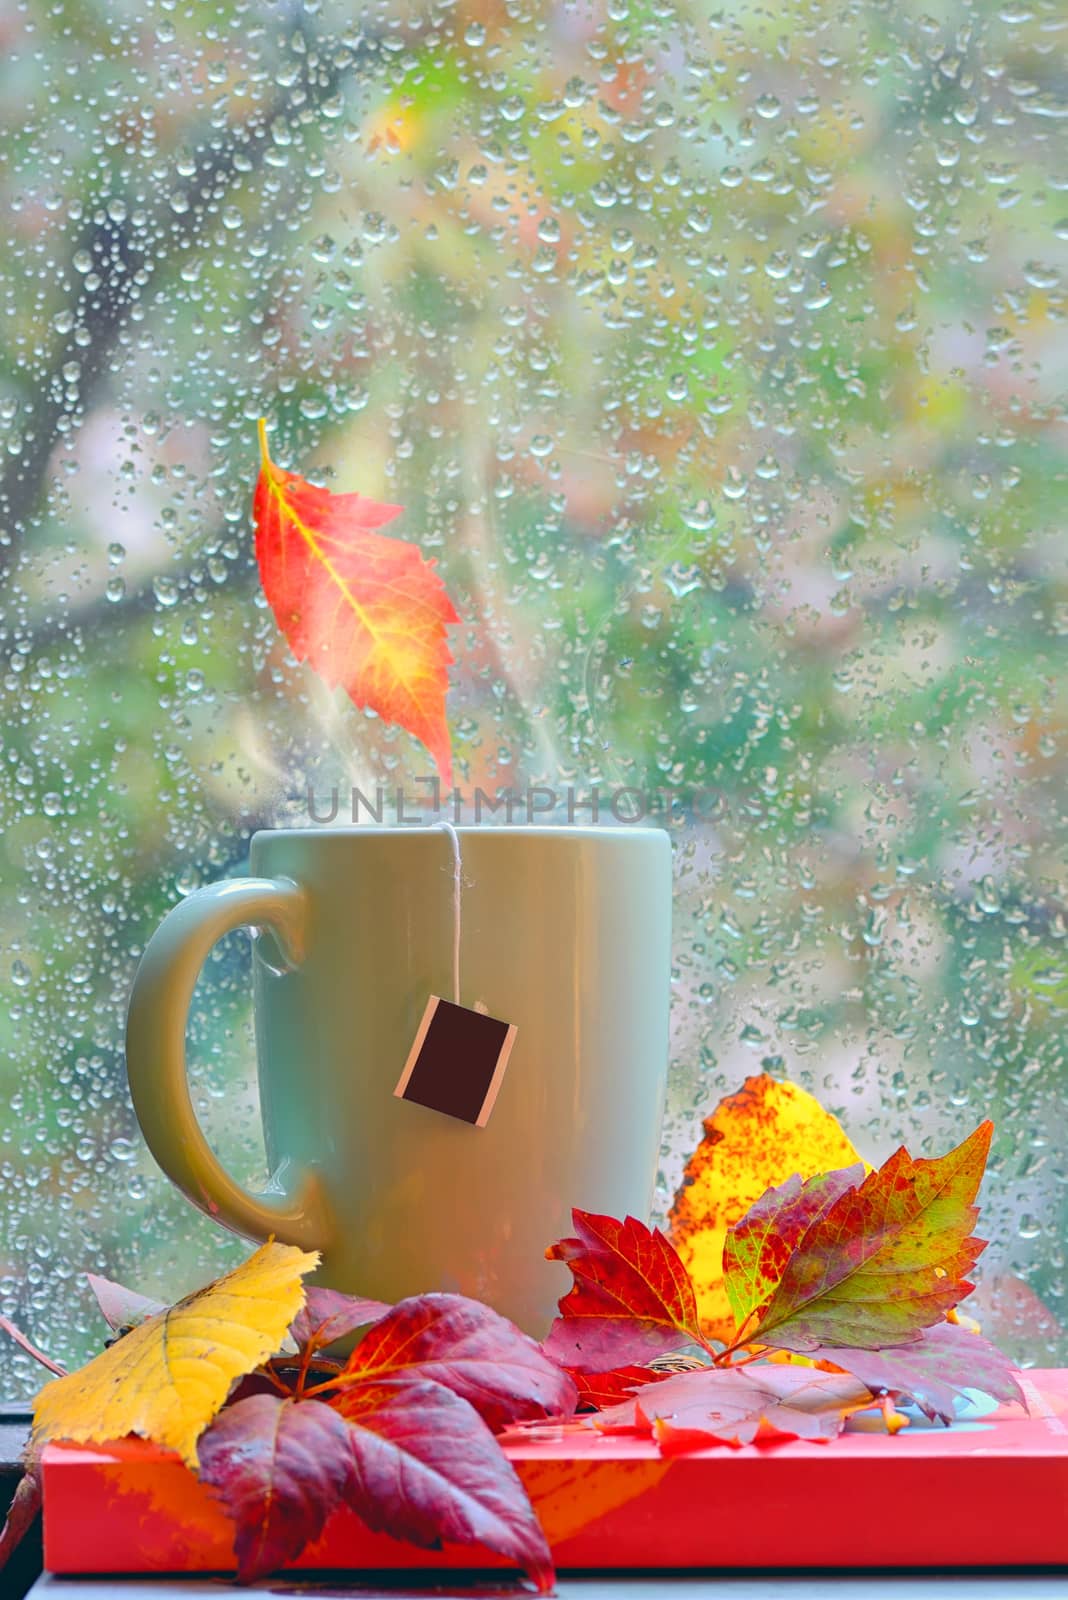 Autumn rainy window with hot tea by mady70